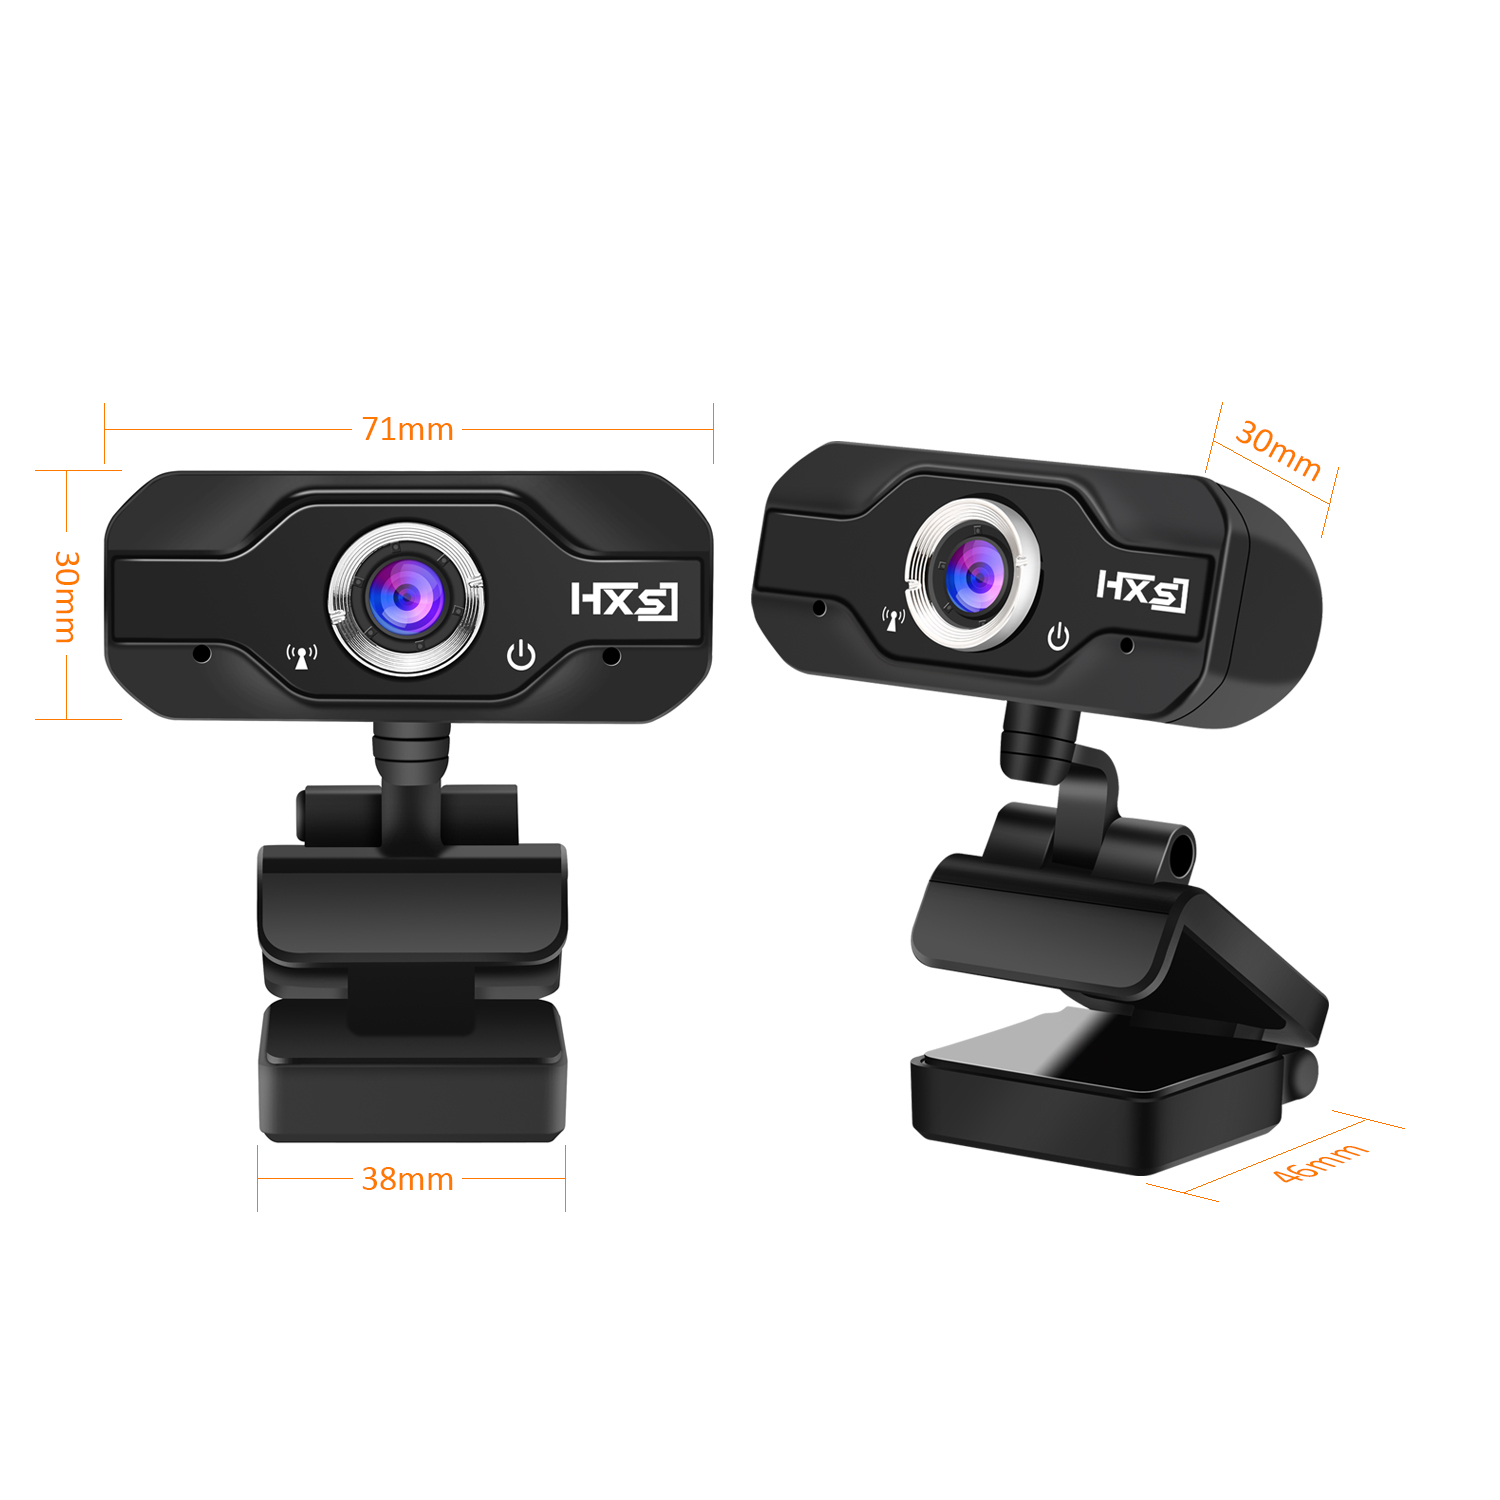 HXSJ HD 720P CMOS Sensor Webcam Built-in Microphone Adjustable Angle for Laptop Desktop 31